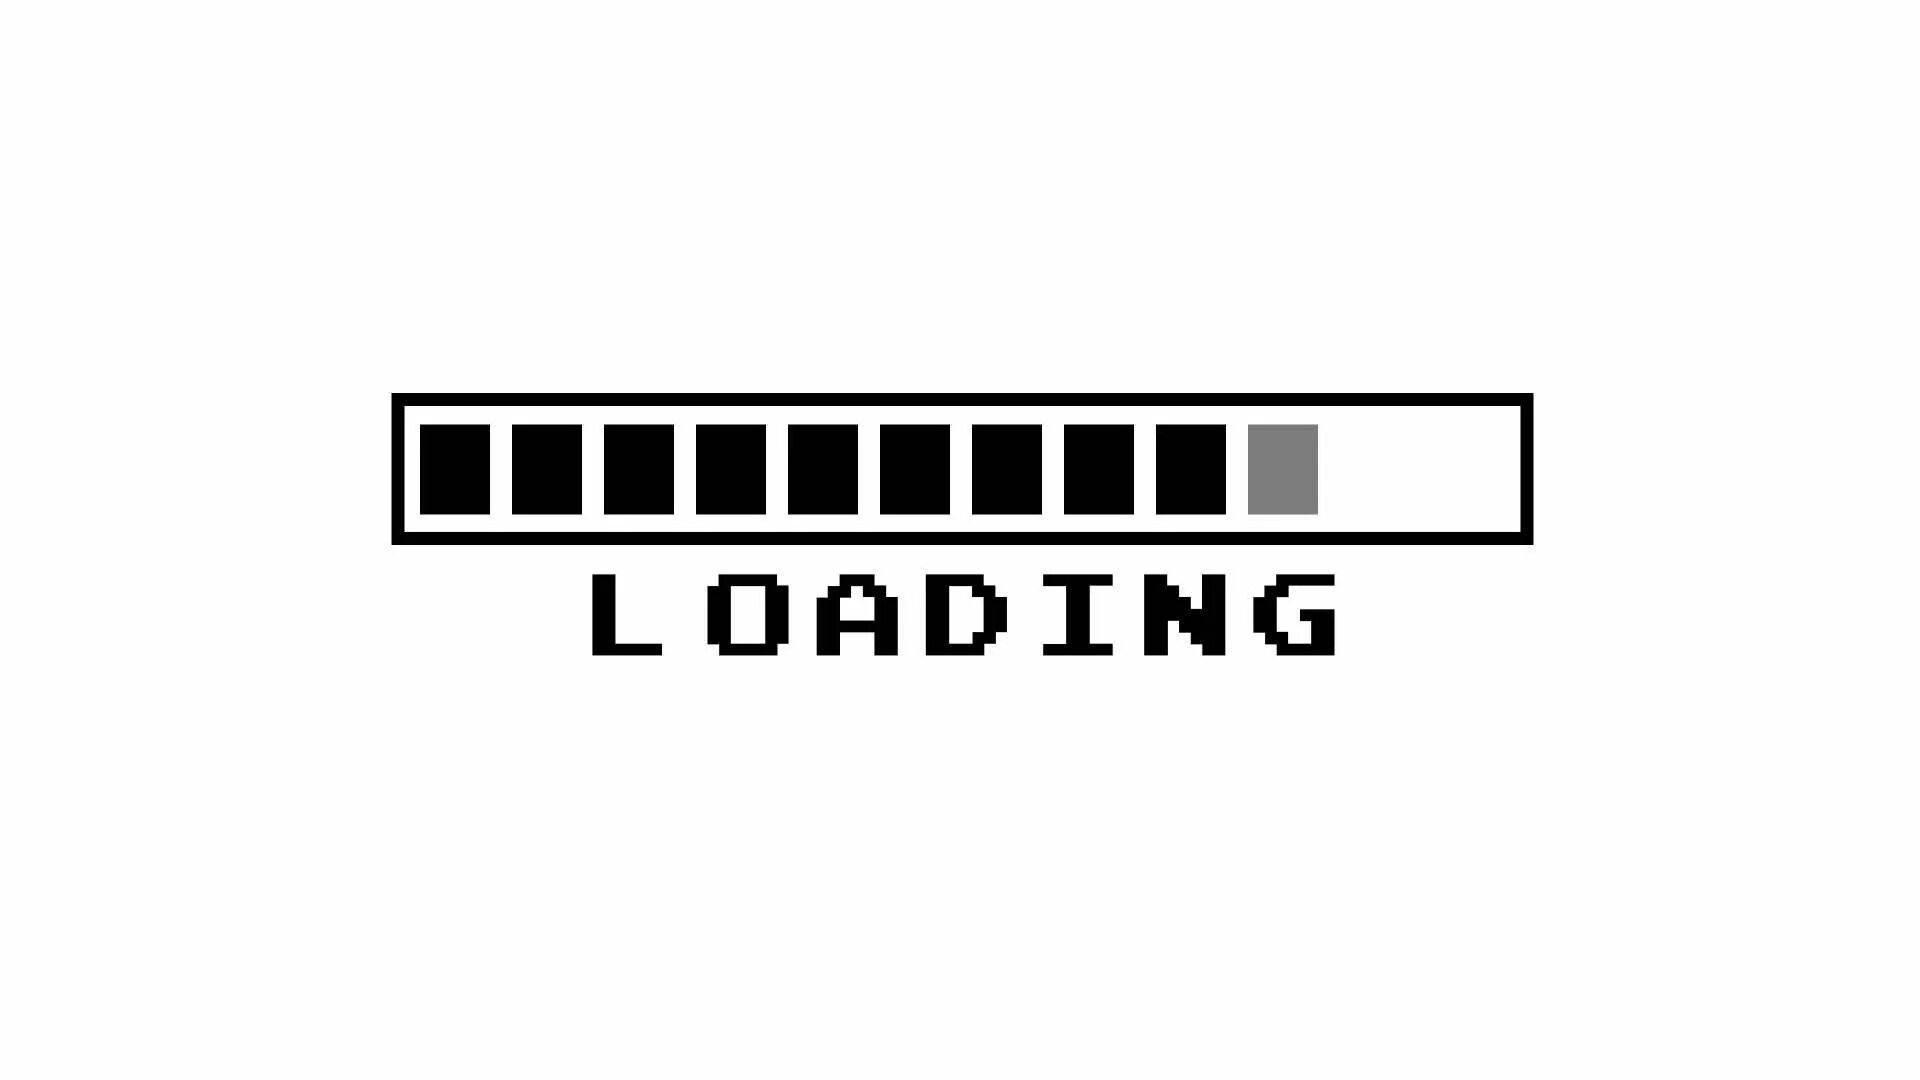 Loading thread. Loading без фона. Надпись loading. Надпись загрузка. Значок загрузки.